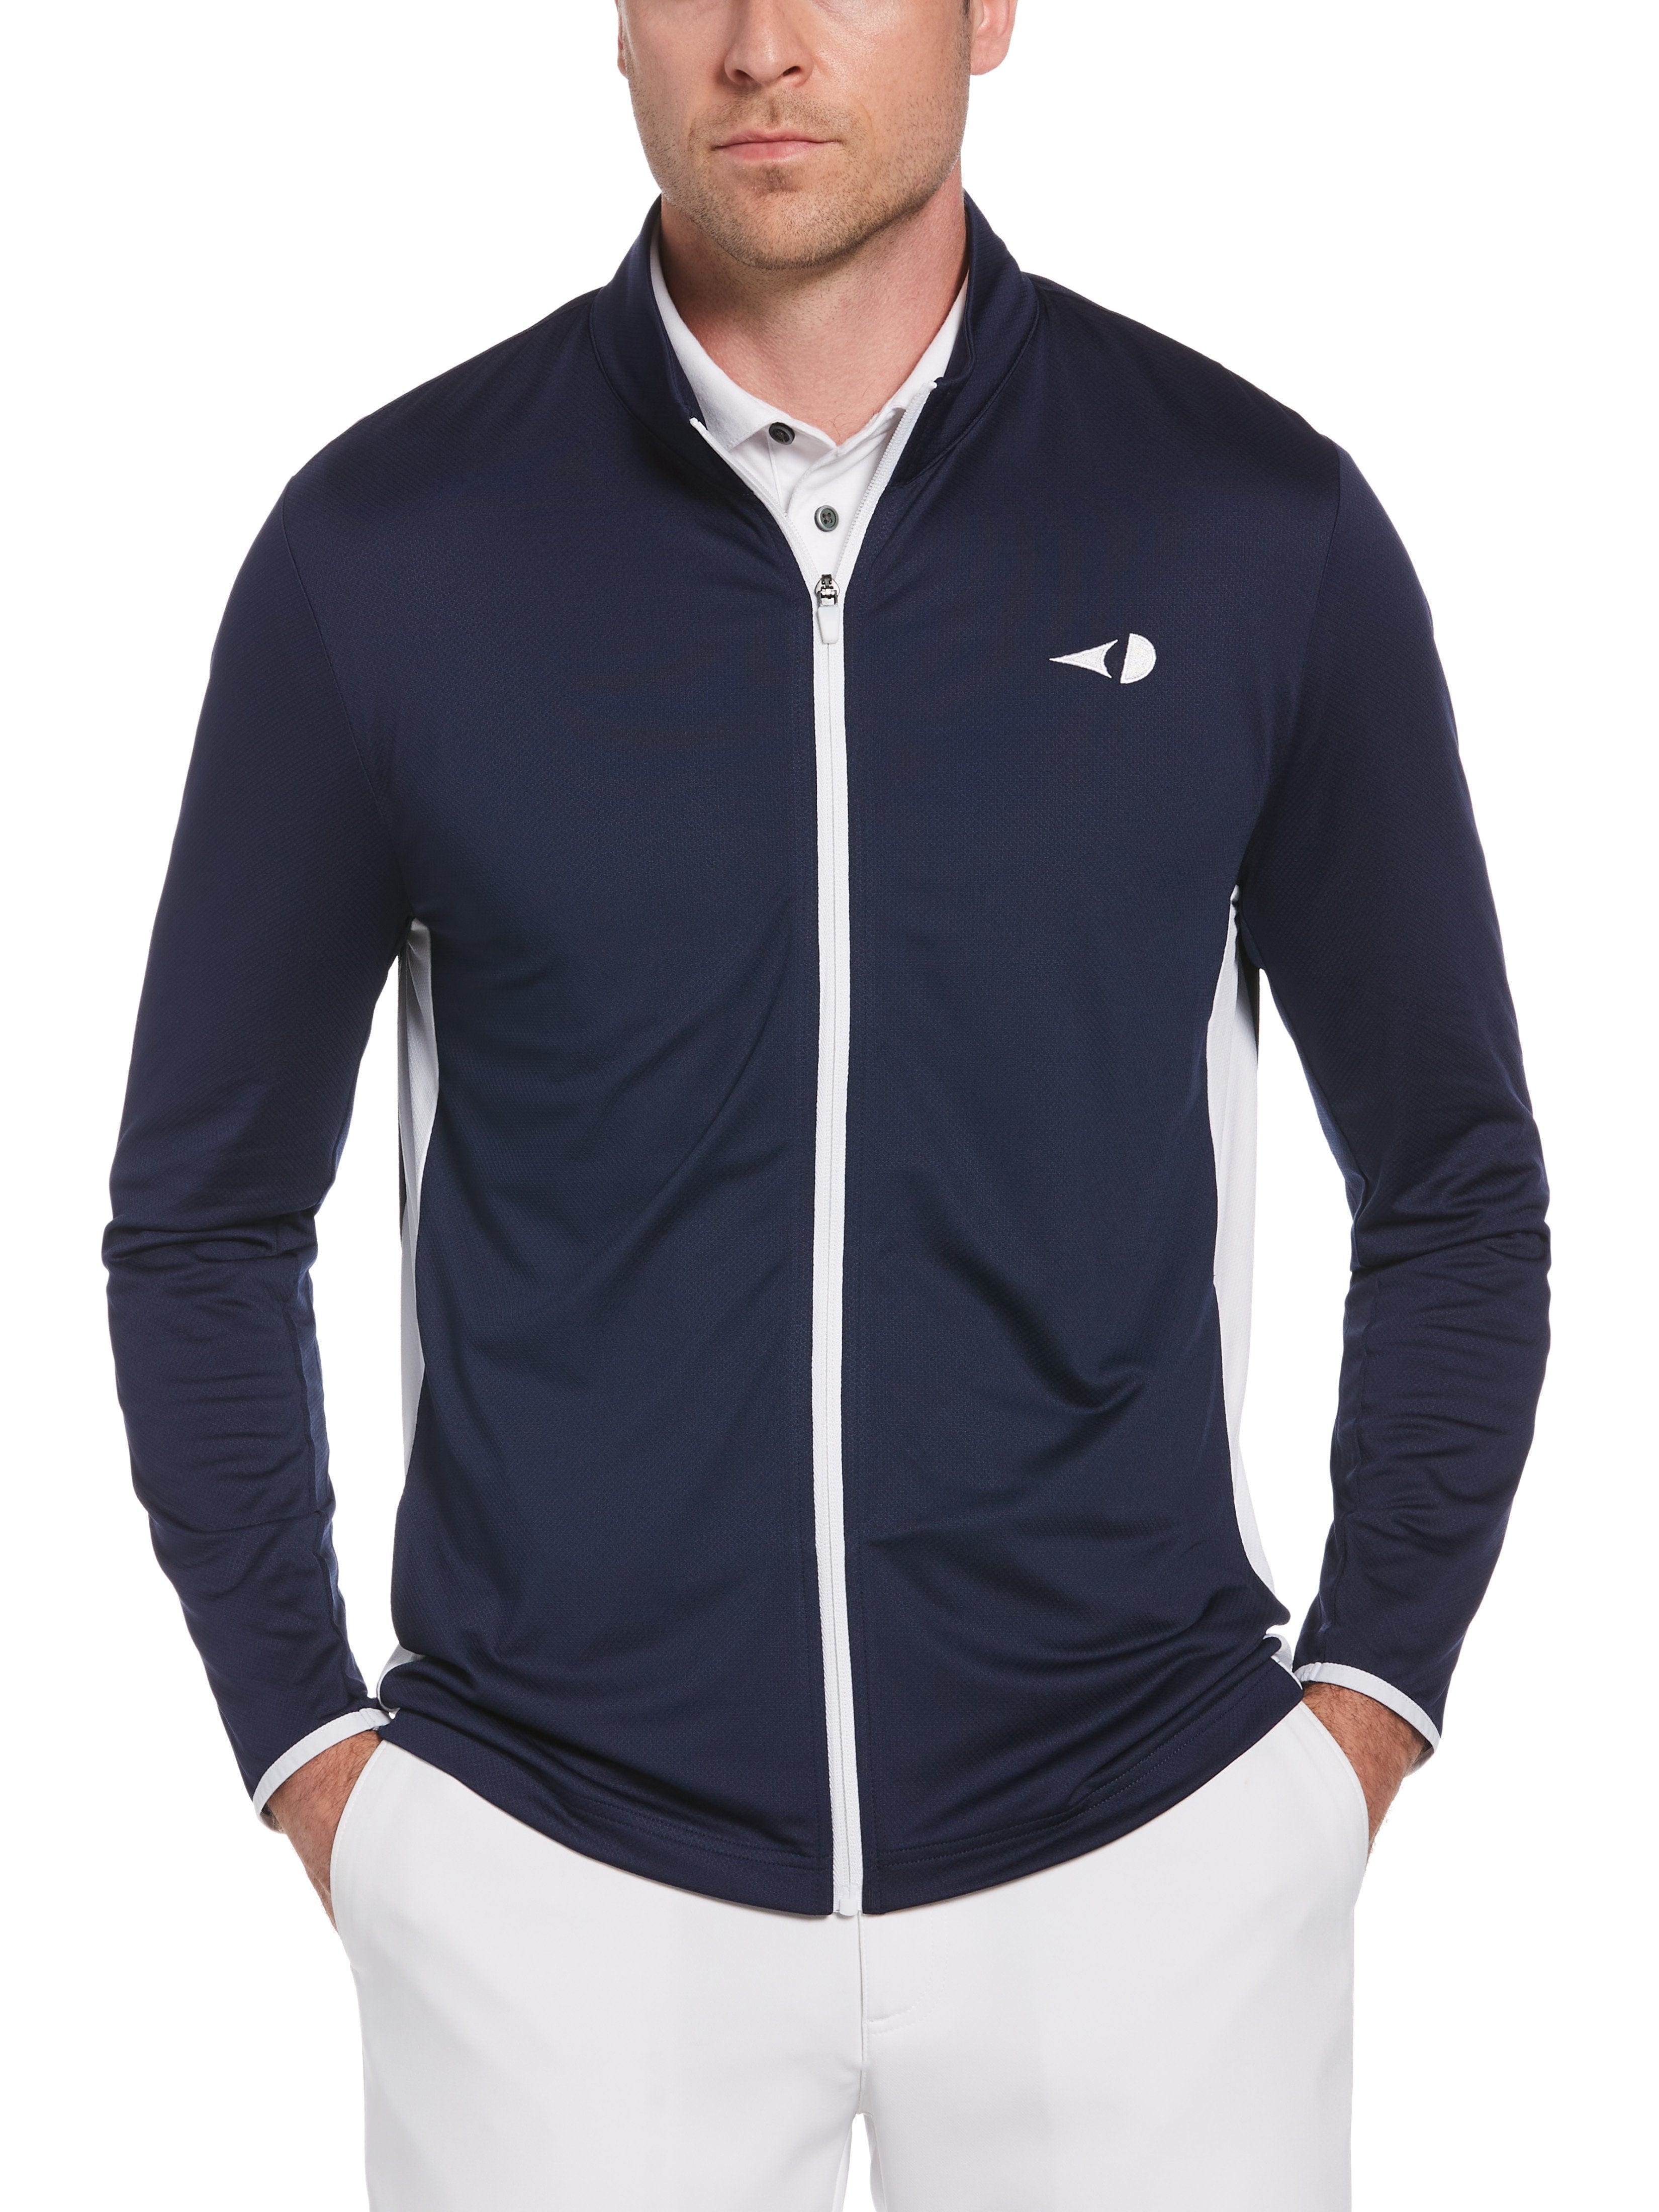 Grand Slam Mens Lightweight Full Zip Base Layer Jacket Top, Size 2XL, Navy Blue, Polyester/Elastane | Golf Apparel Shop